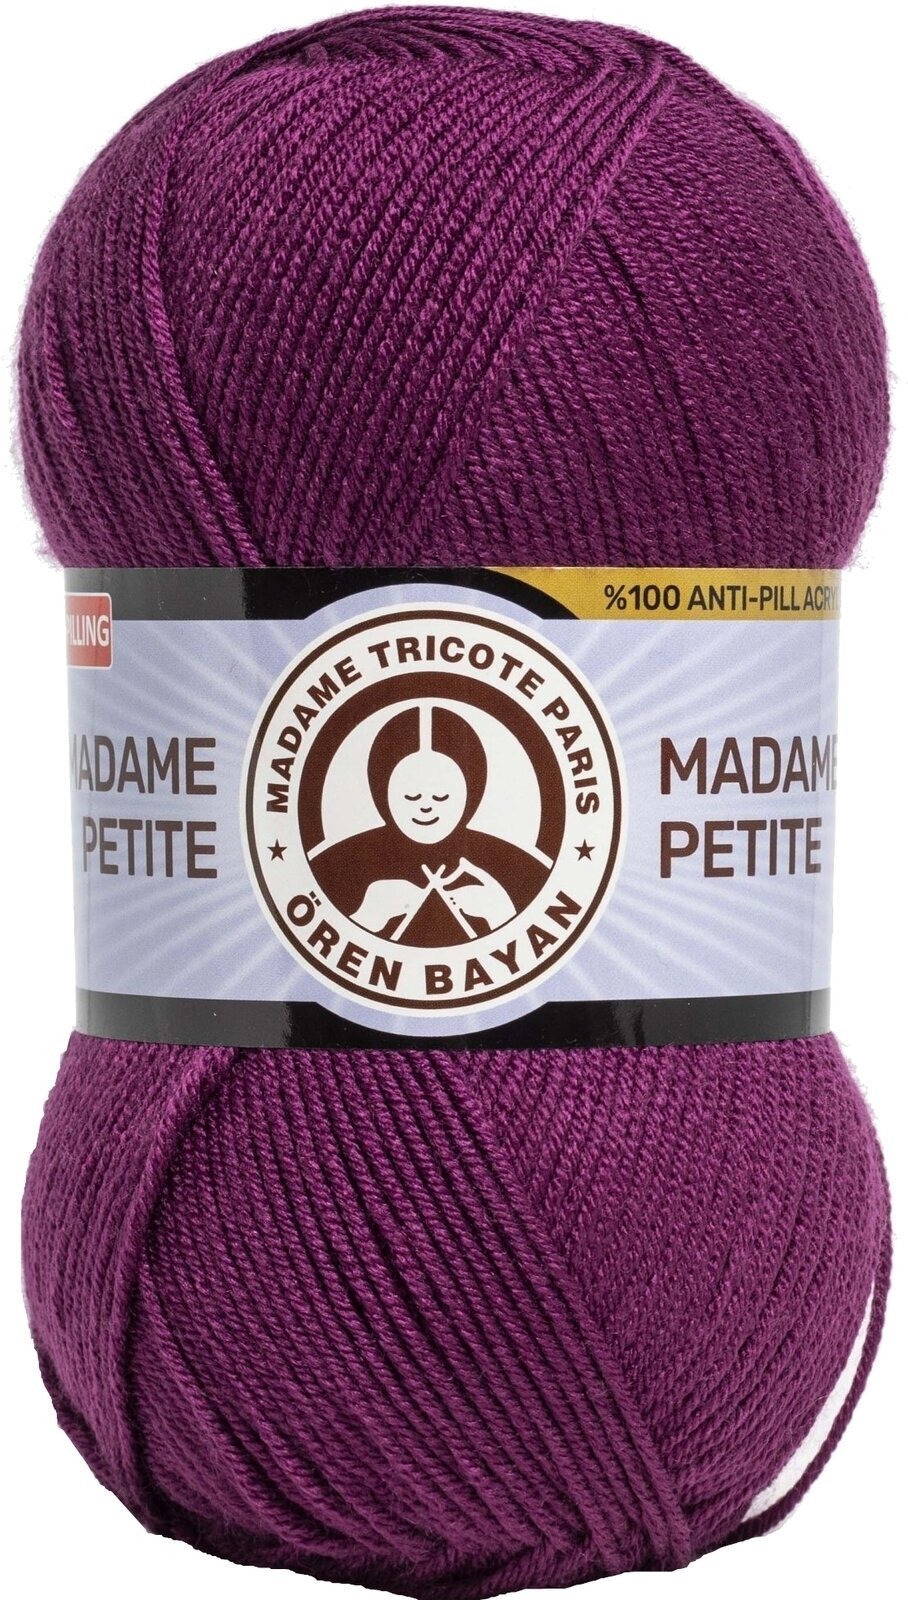 Breigaren Madame Tricote Paris Madame Petite 3848 52 Breigaren